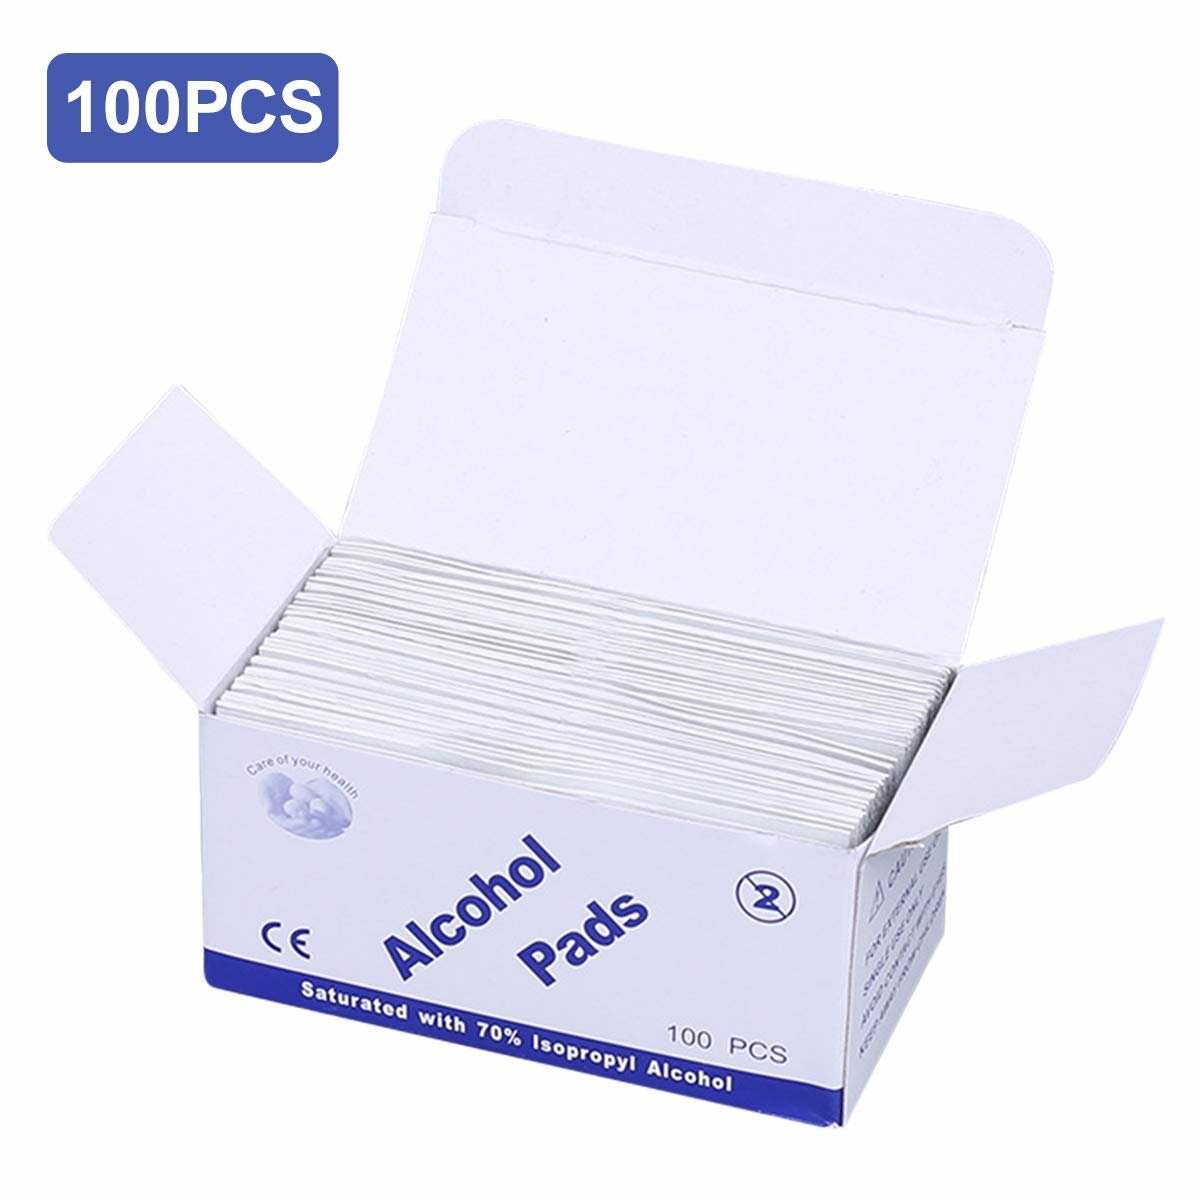 100Pcs Disposable Alcohol Pads 2-Ply Cotton Personal Care